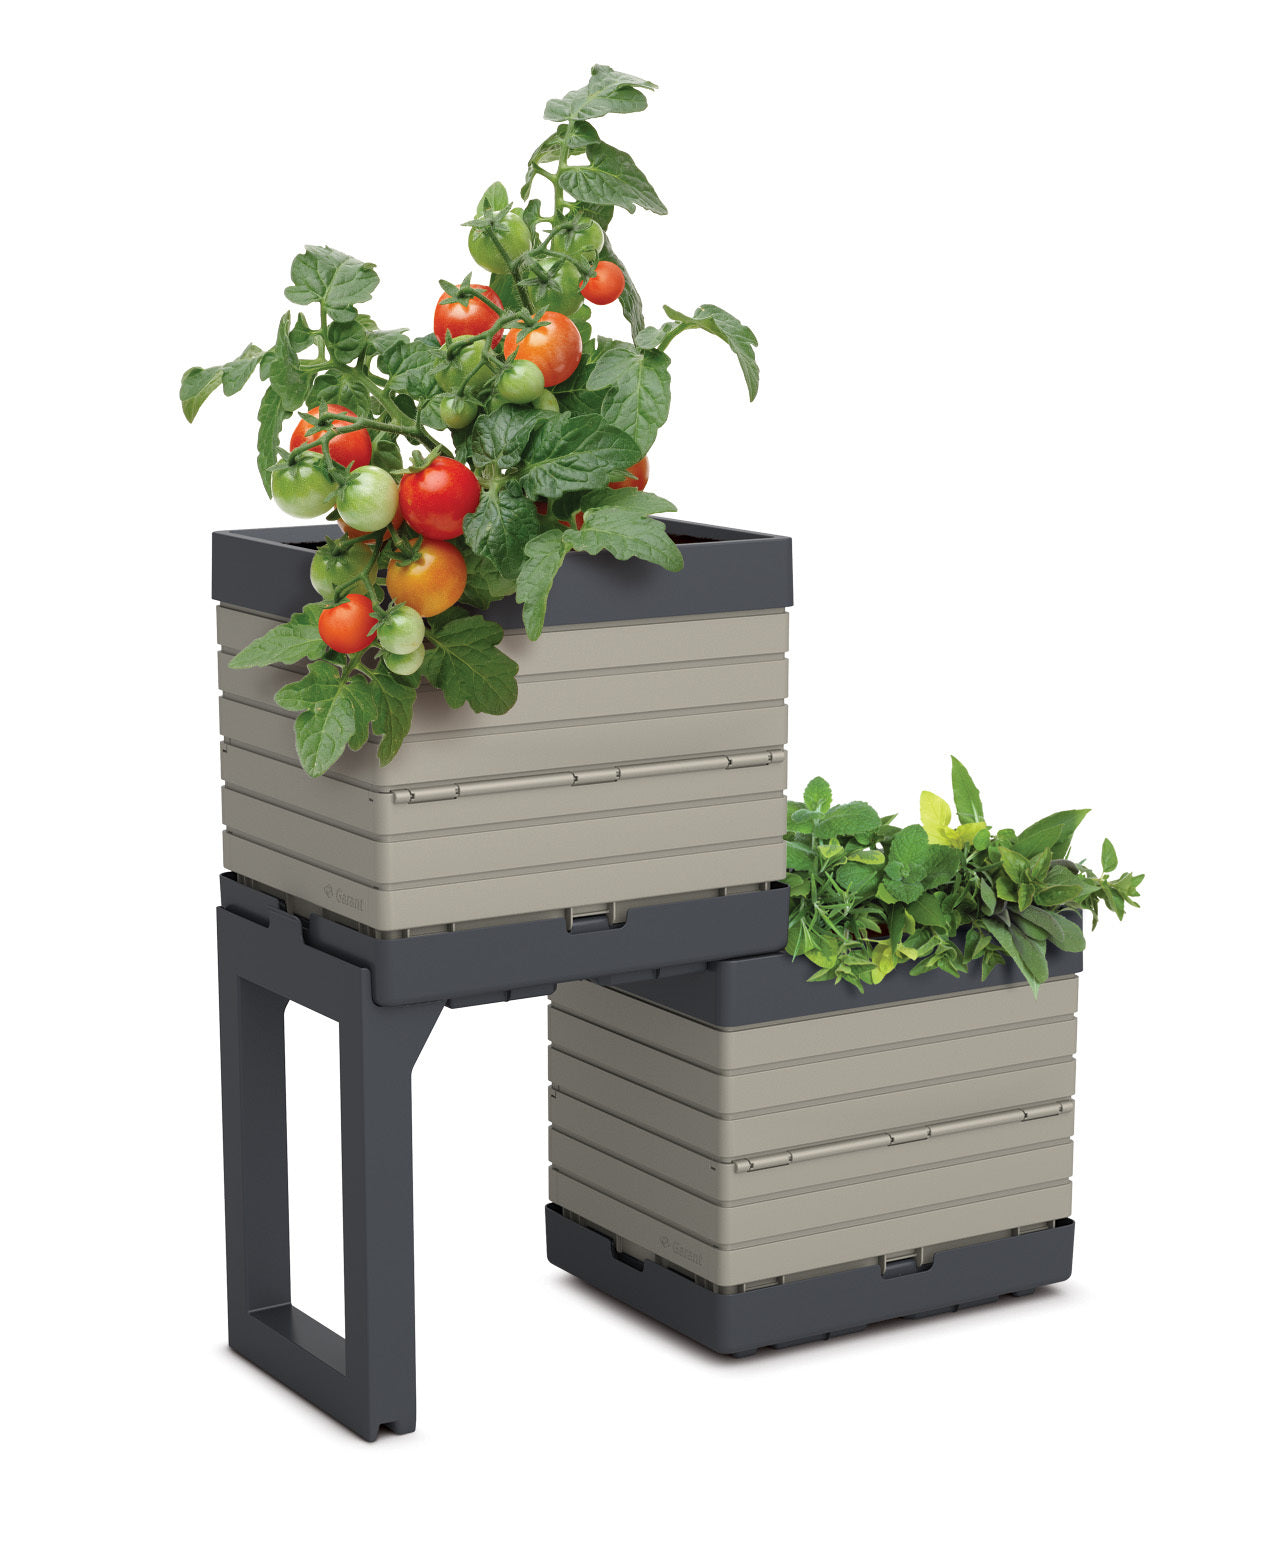 Individual bin, 14x11x13", polypro greige M3 modular garden